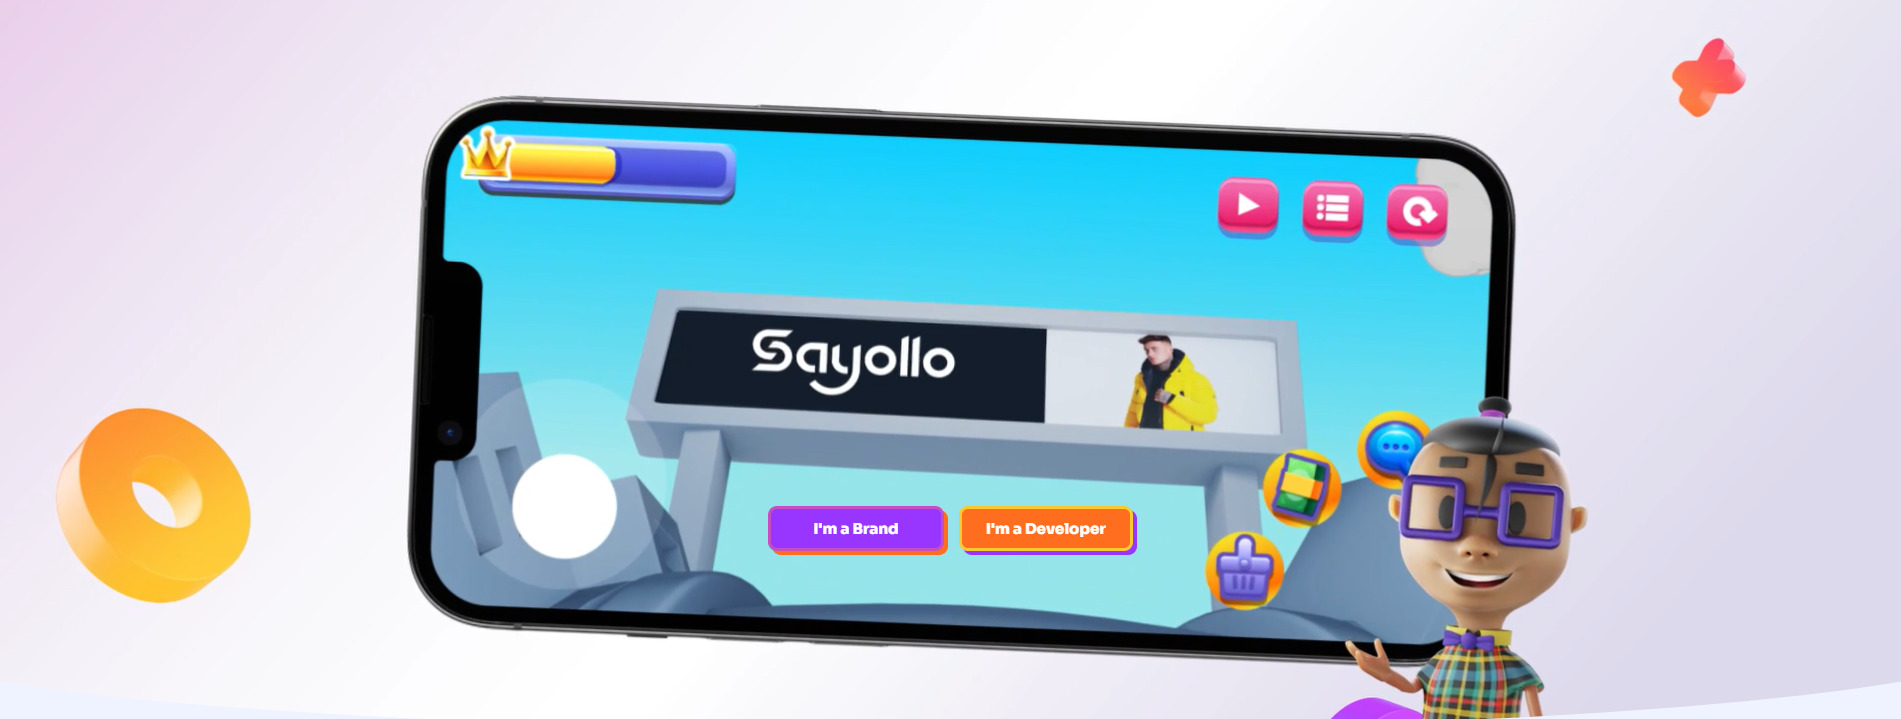 sayollo israeli startup